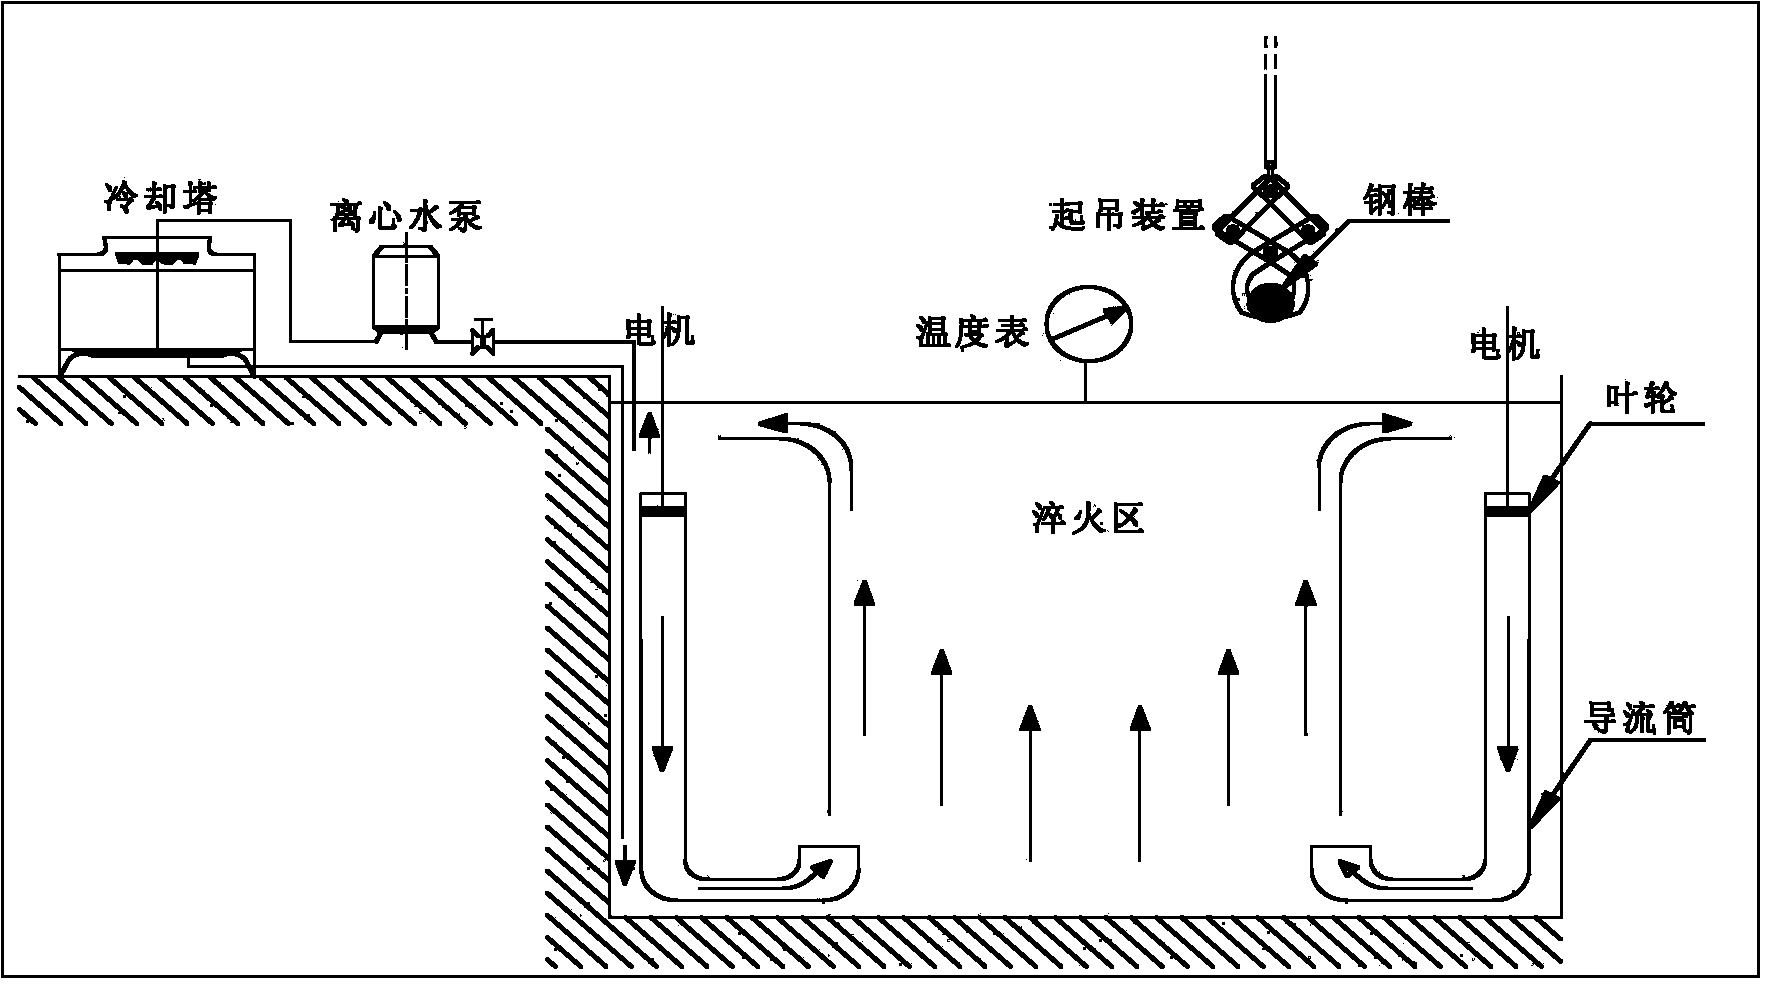 Preparation method of steel rod of rod mill